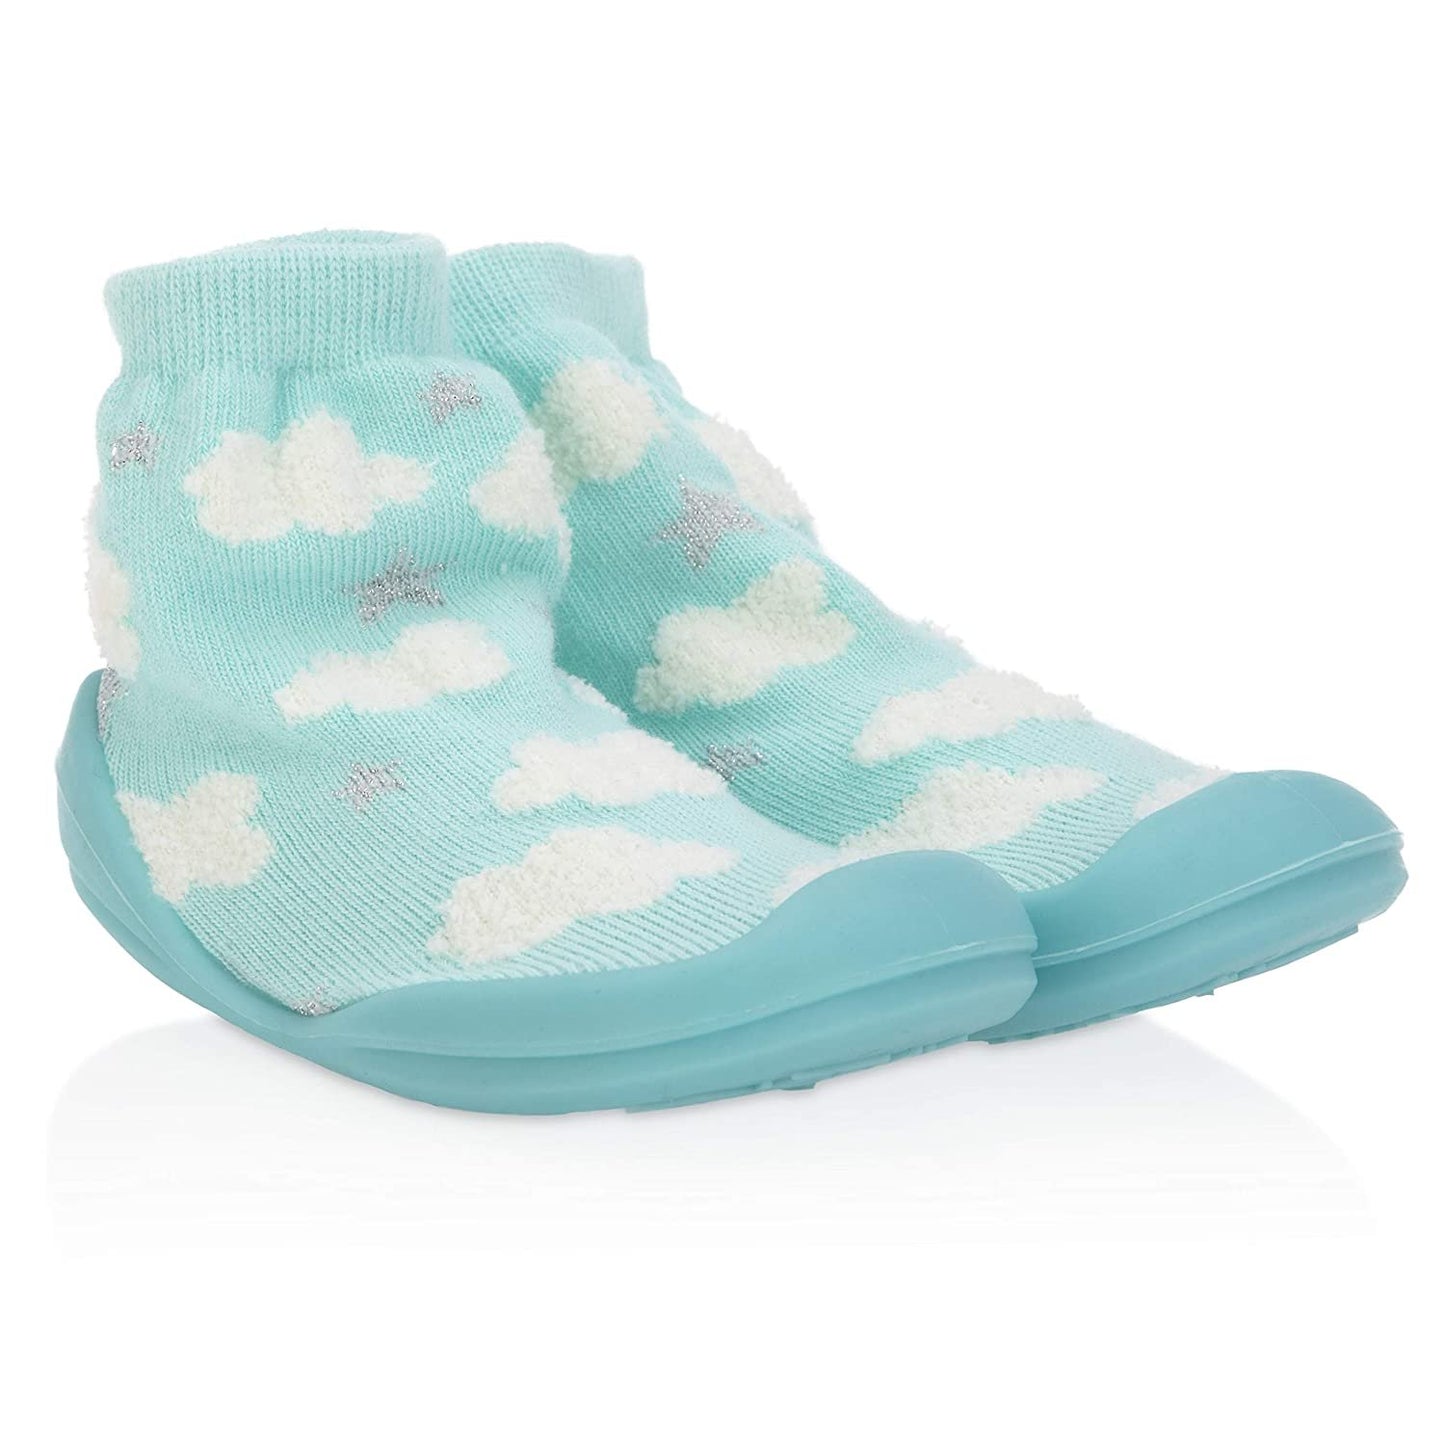 Nuby Snekz Comfortable Rubber Sole Sock Shoes for First Steps- Aqua Clouds/Medium 14-22 Months